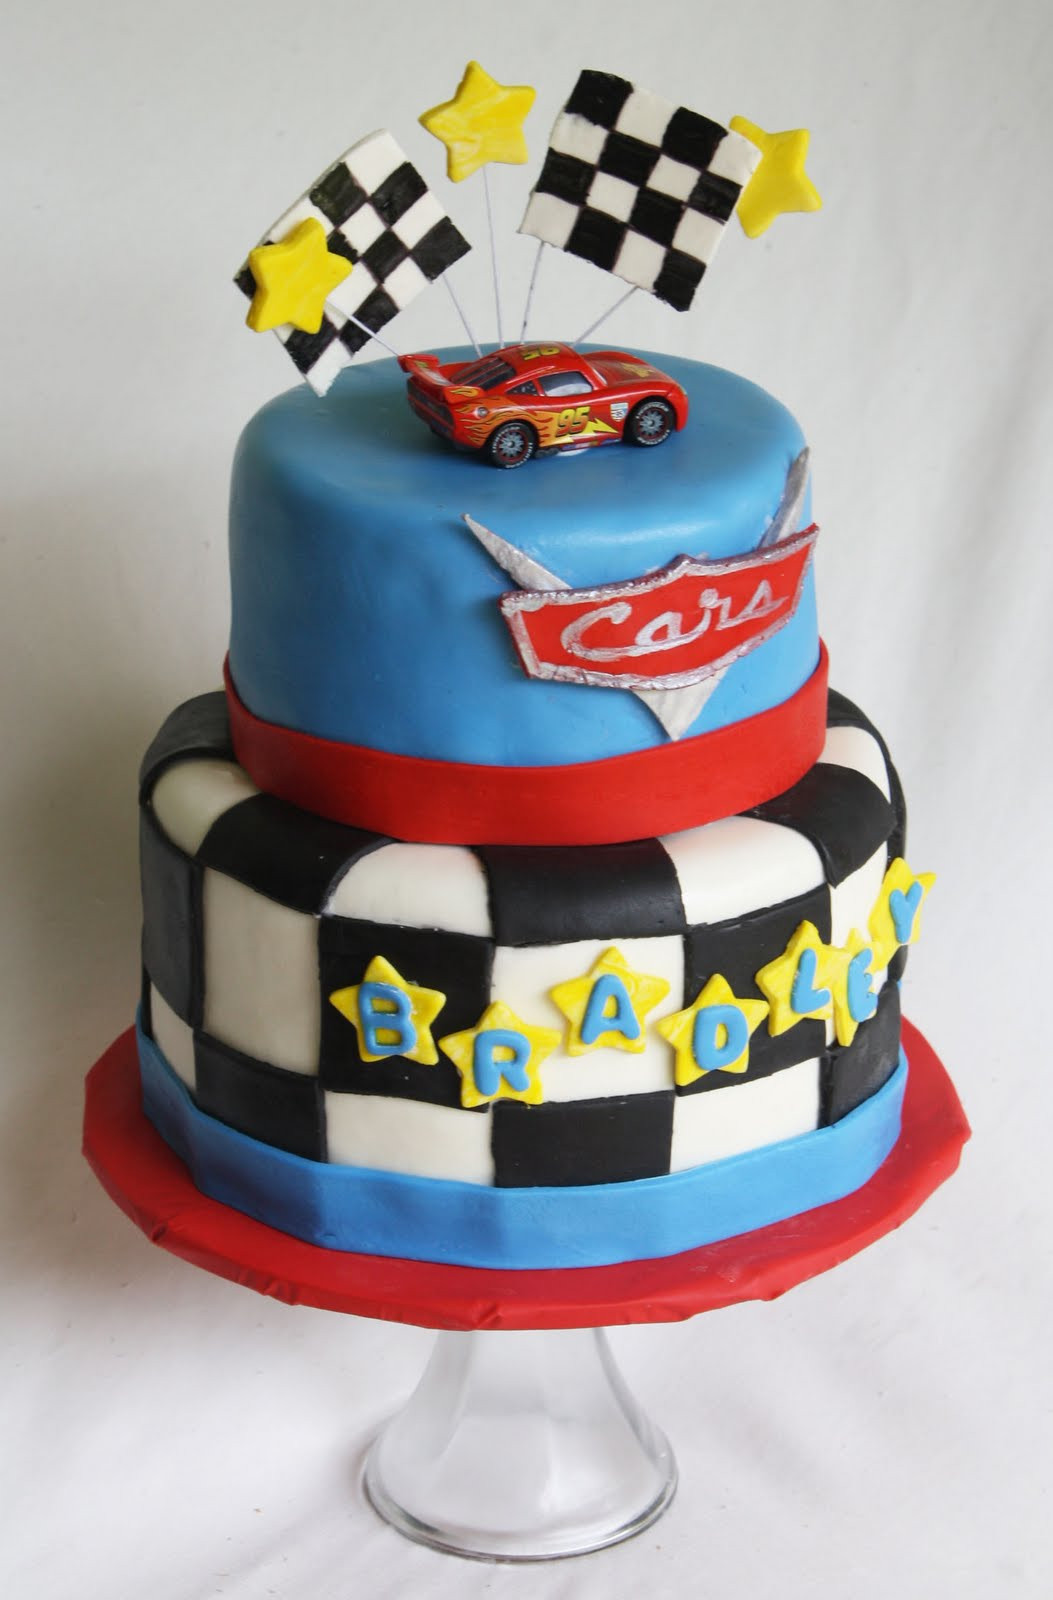 Disney Cars Birthday Cake
 A Disney Cars Cake